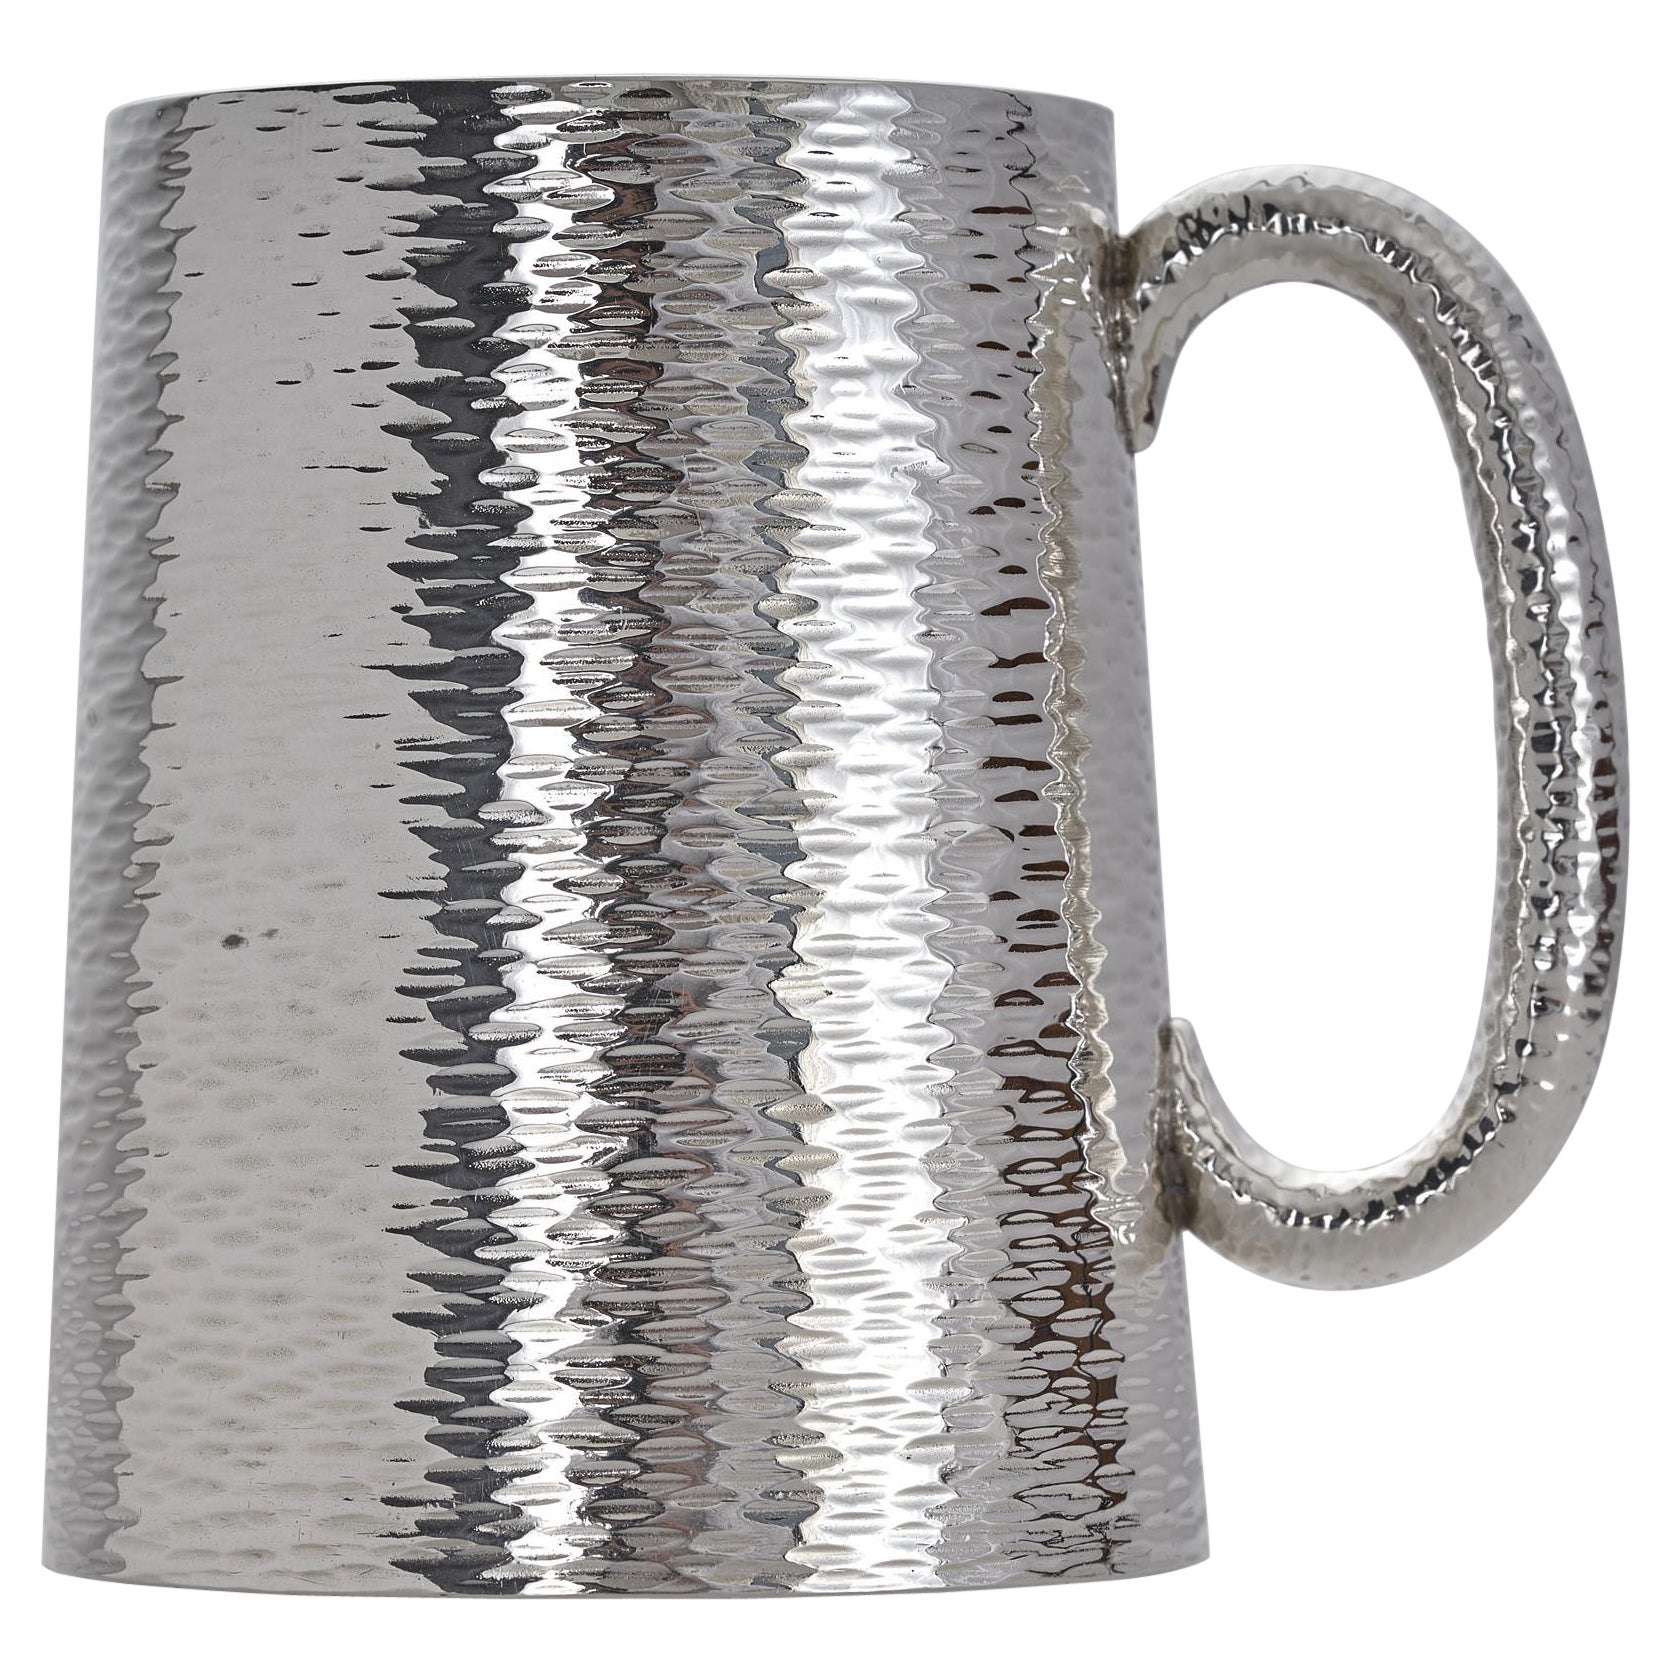 Hand-hammered Victorian silver child's mug